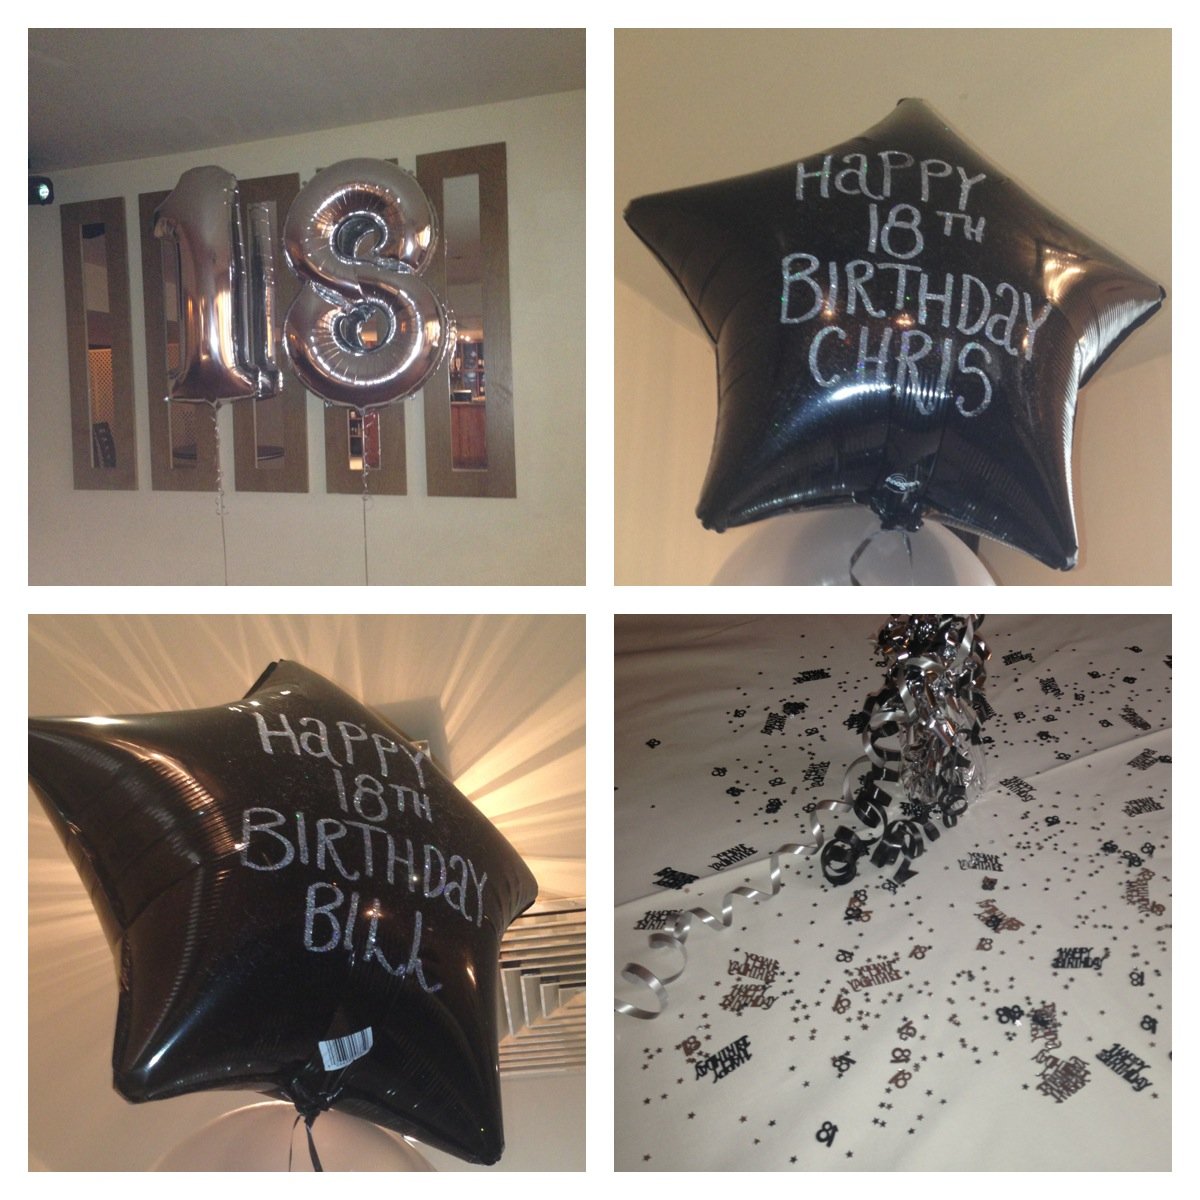 18th Birthday balloons at Reids